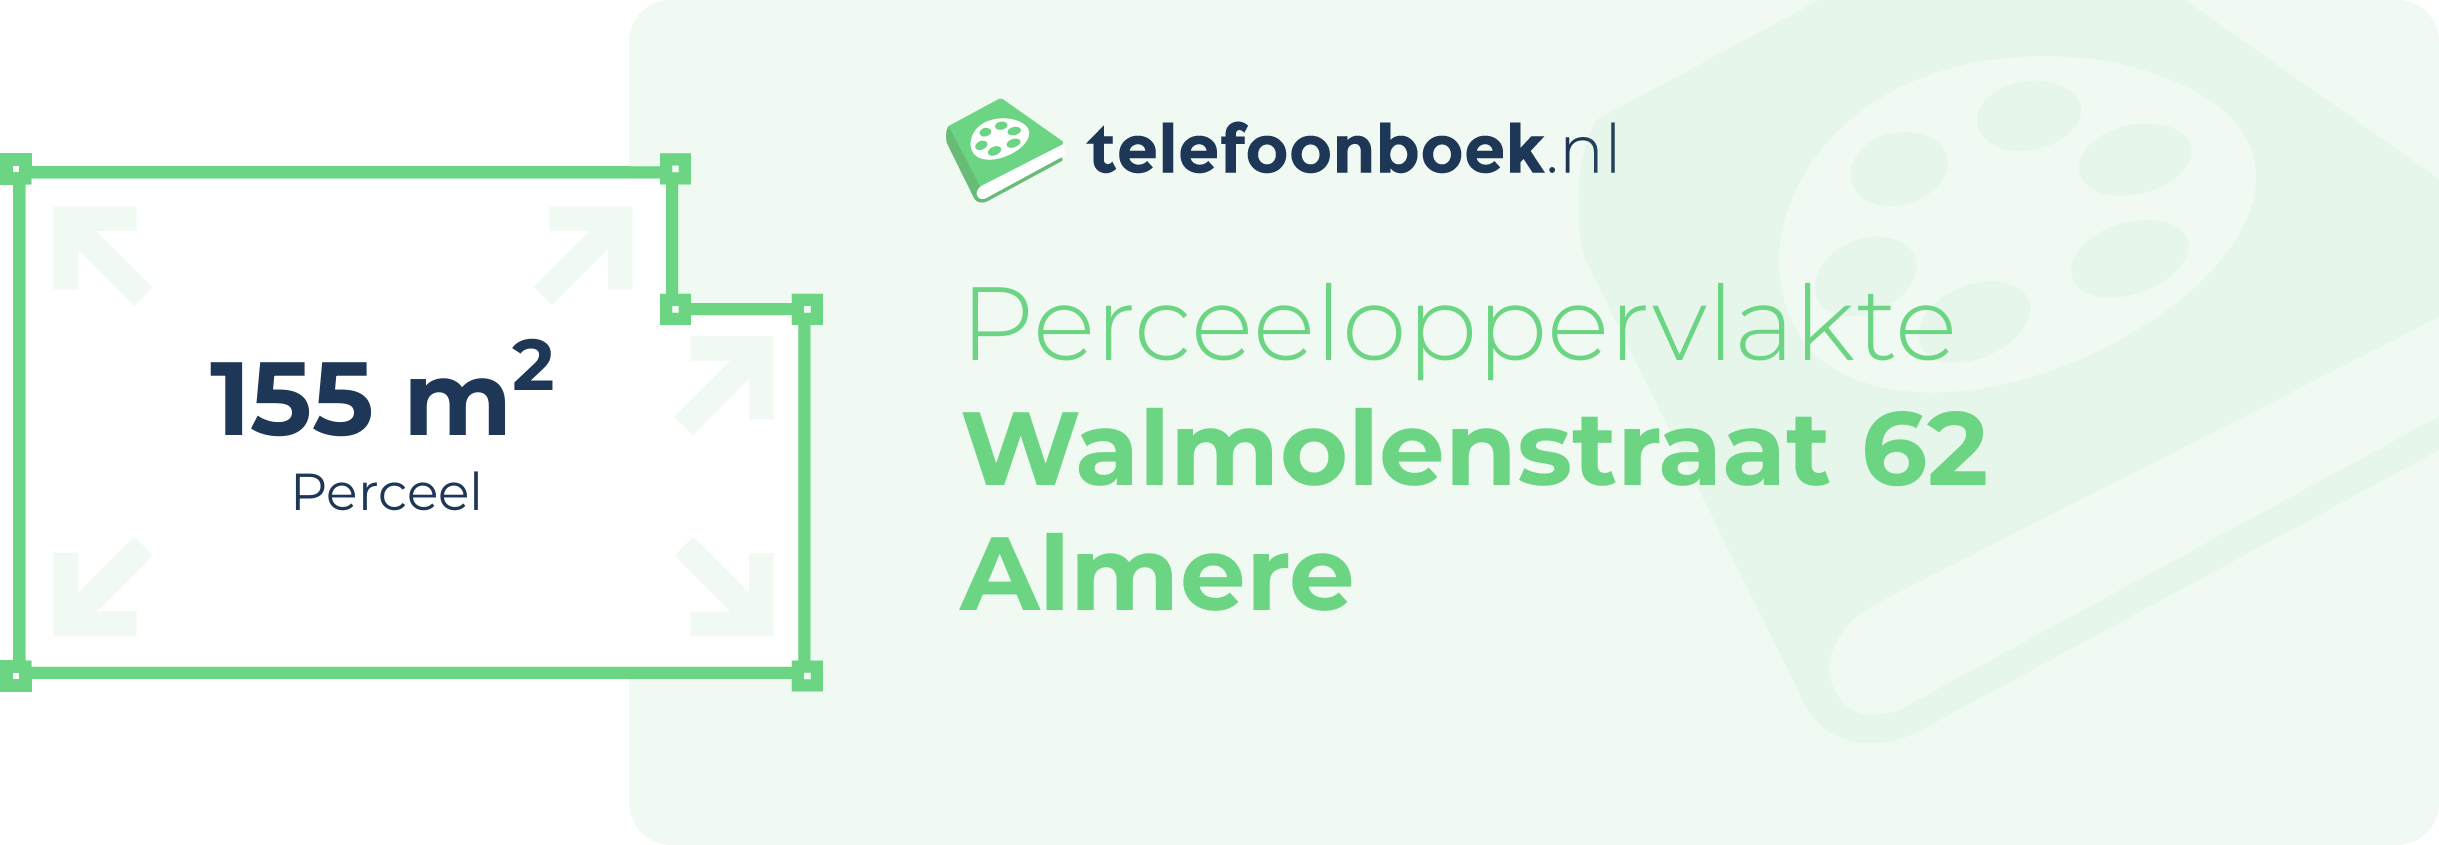 Perceeloppervlakte Walmolenstraat 62 Almere